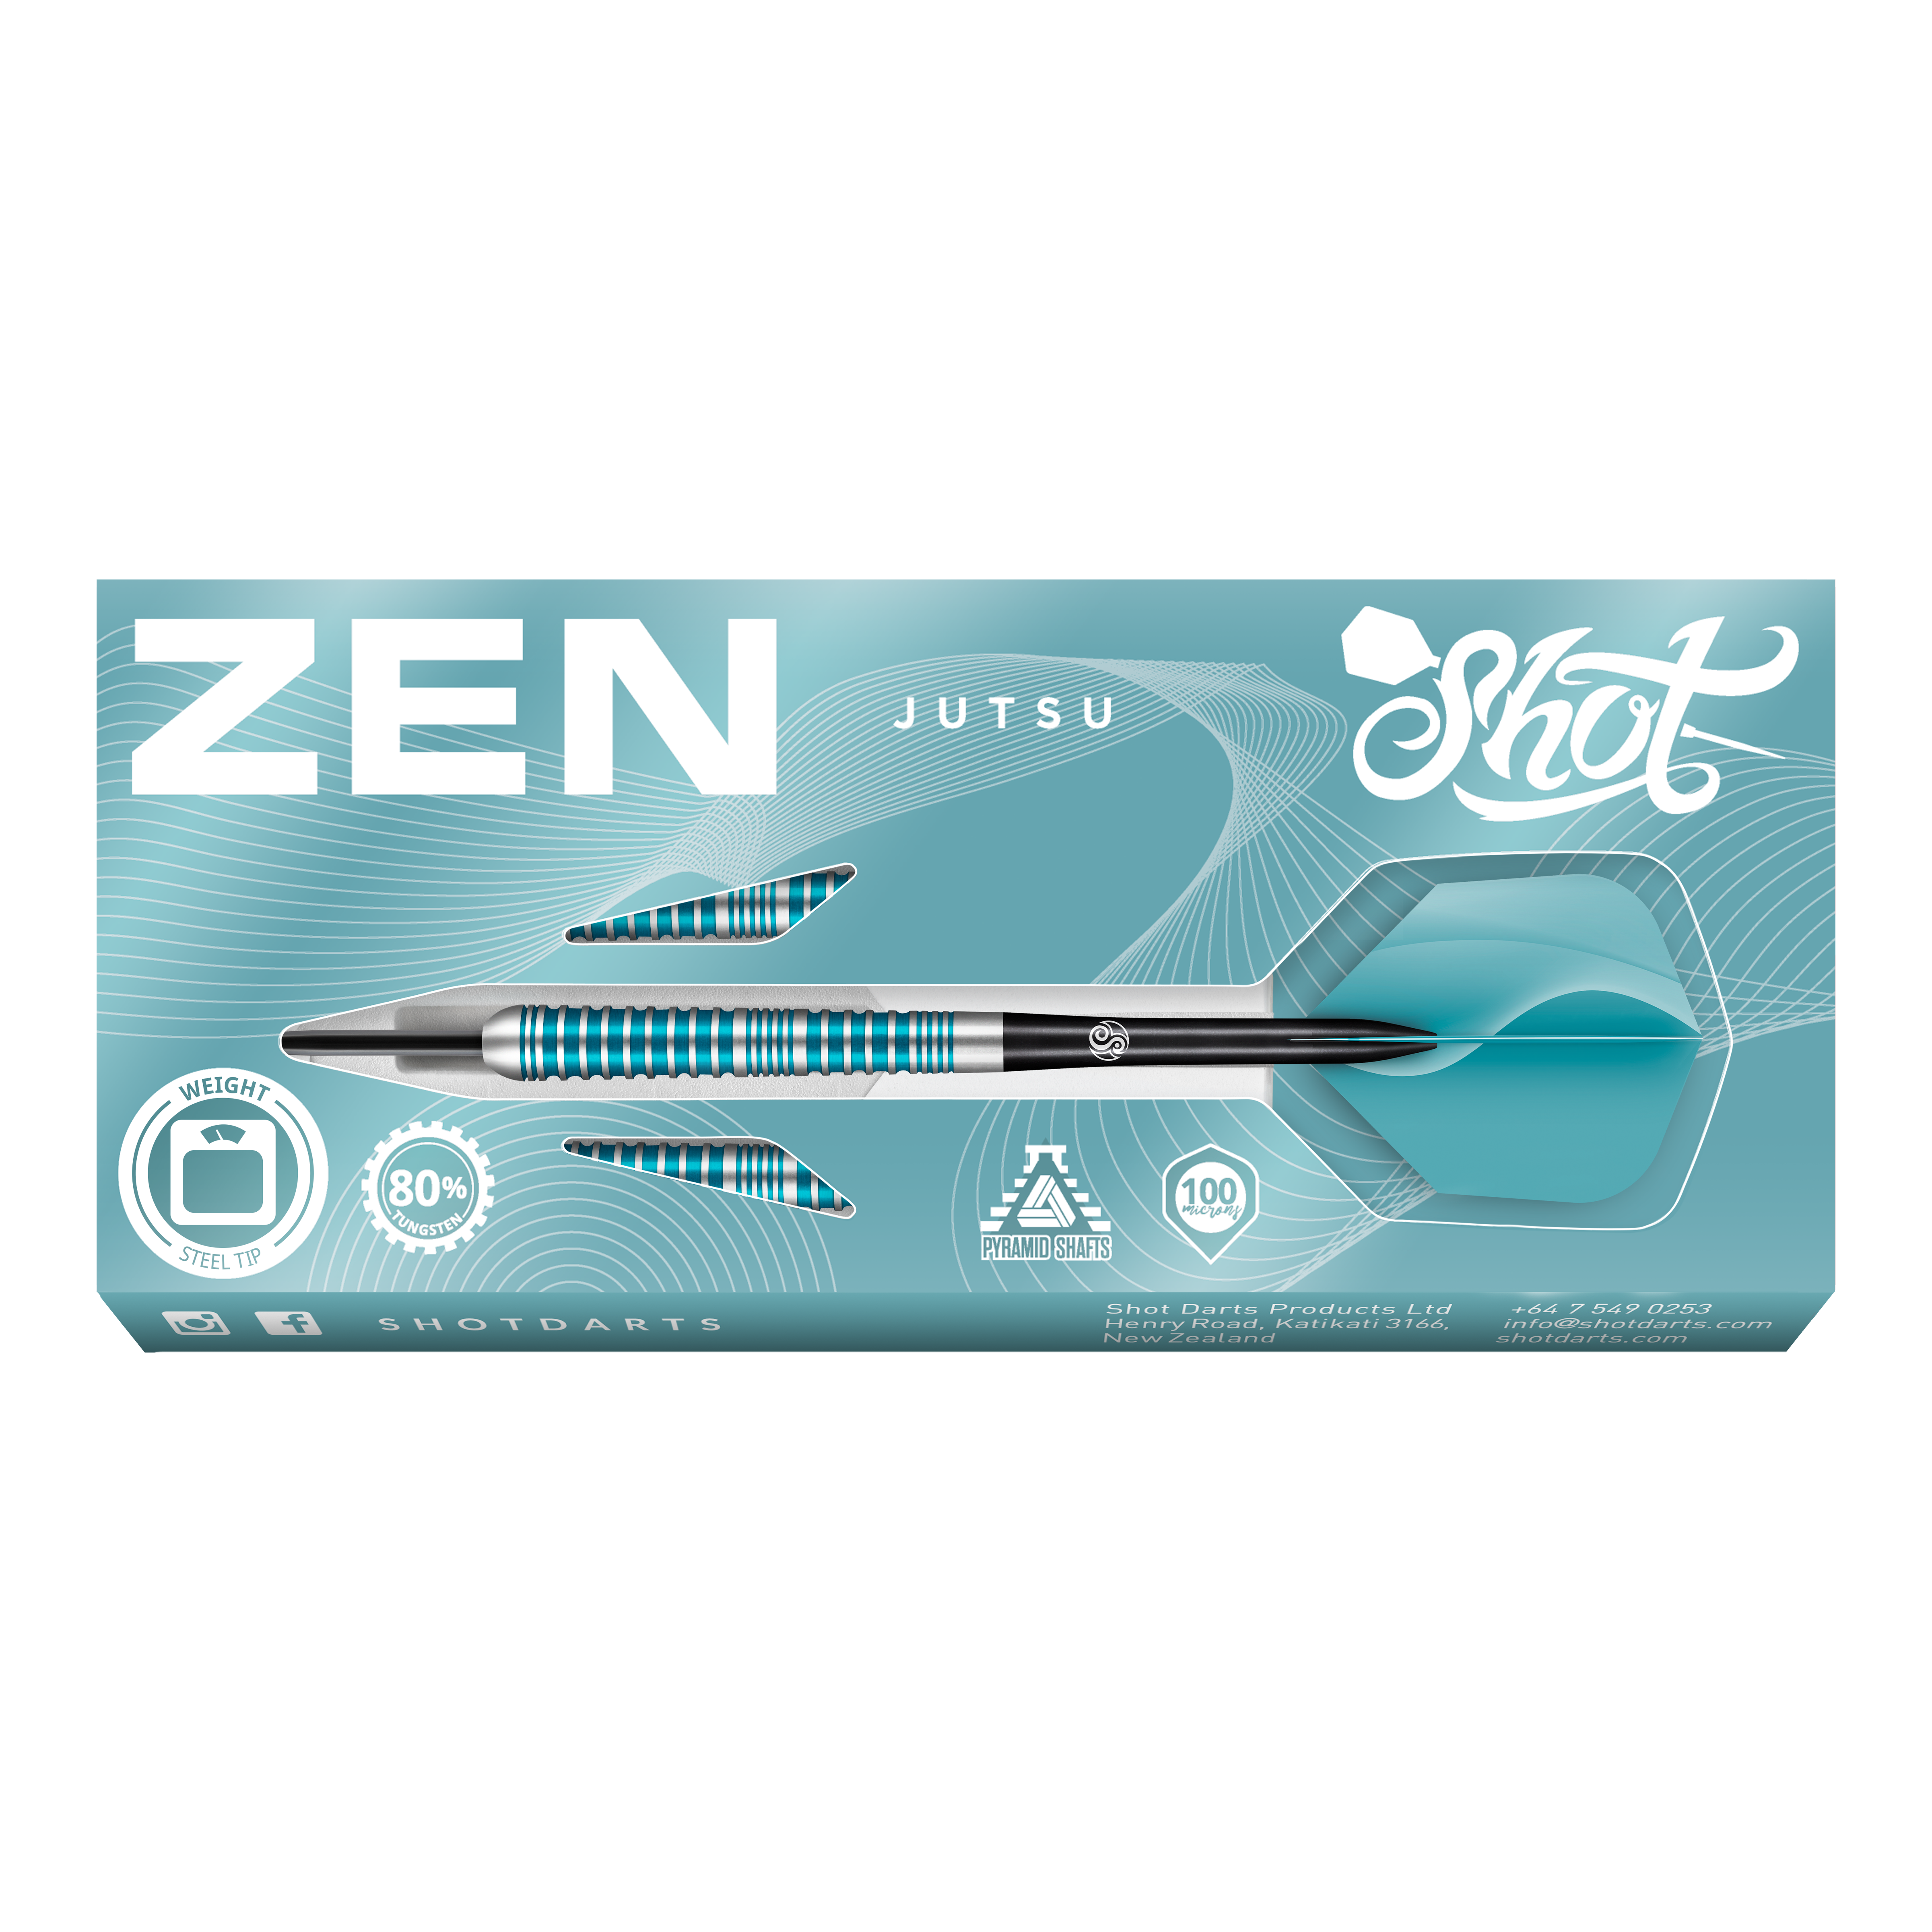 Shot ZEN Jutsu 2.0 soft darts - 20g